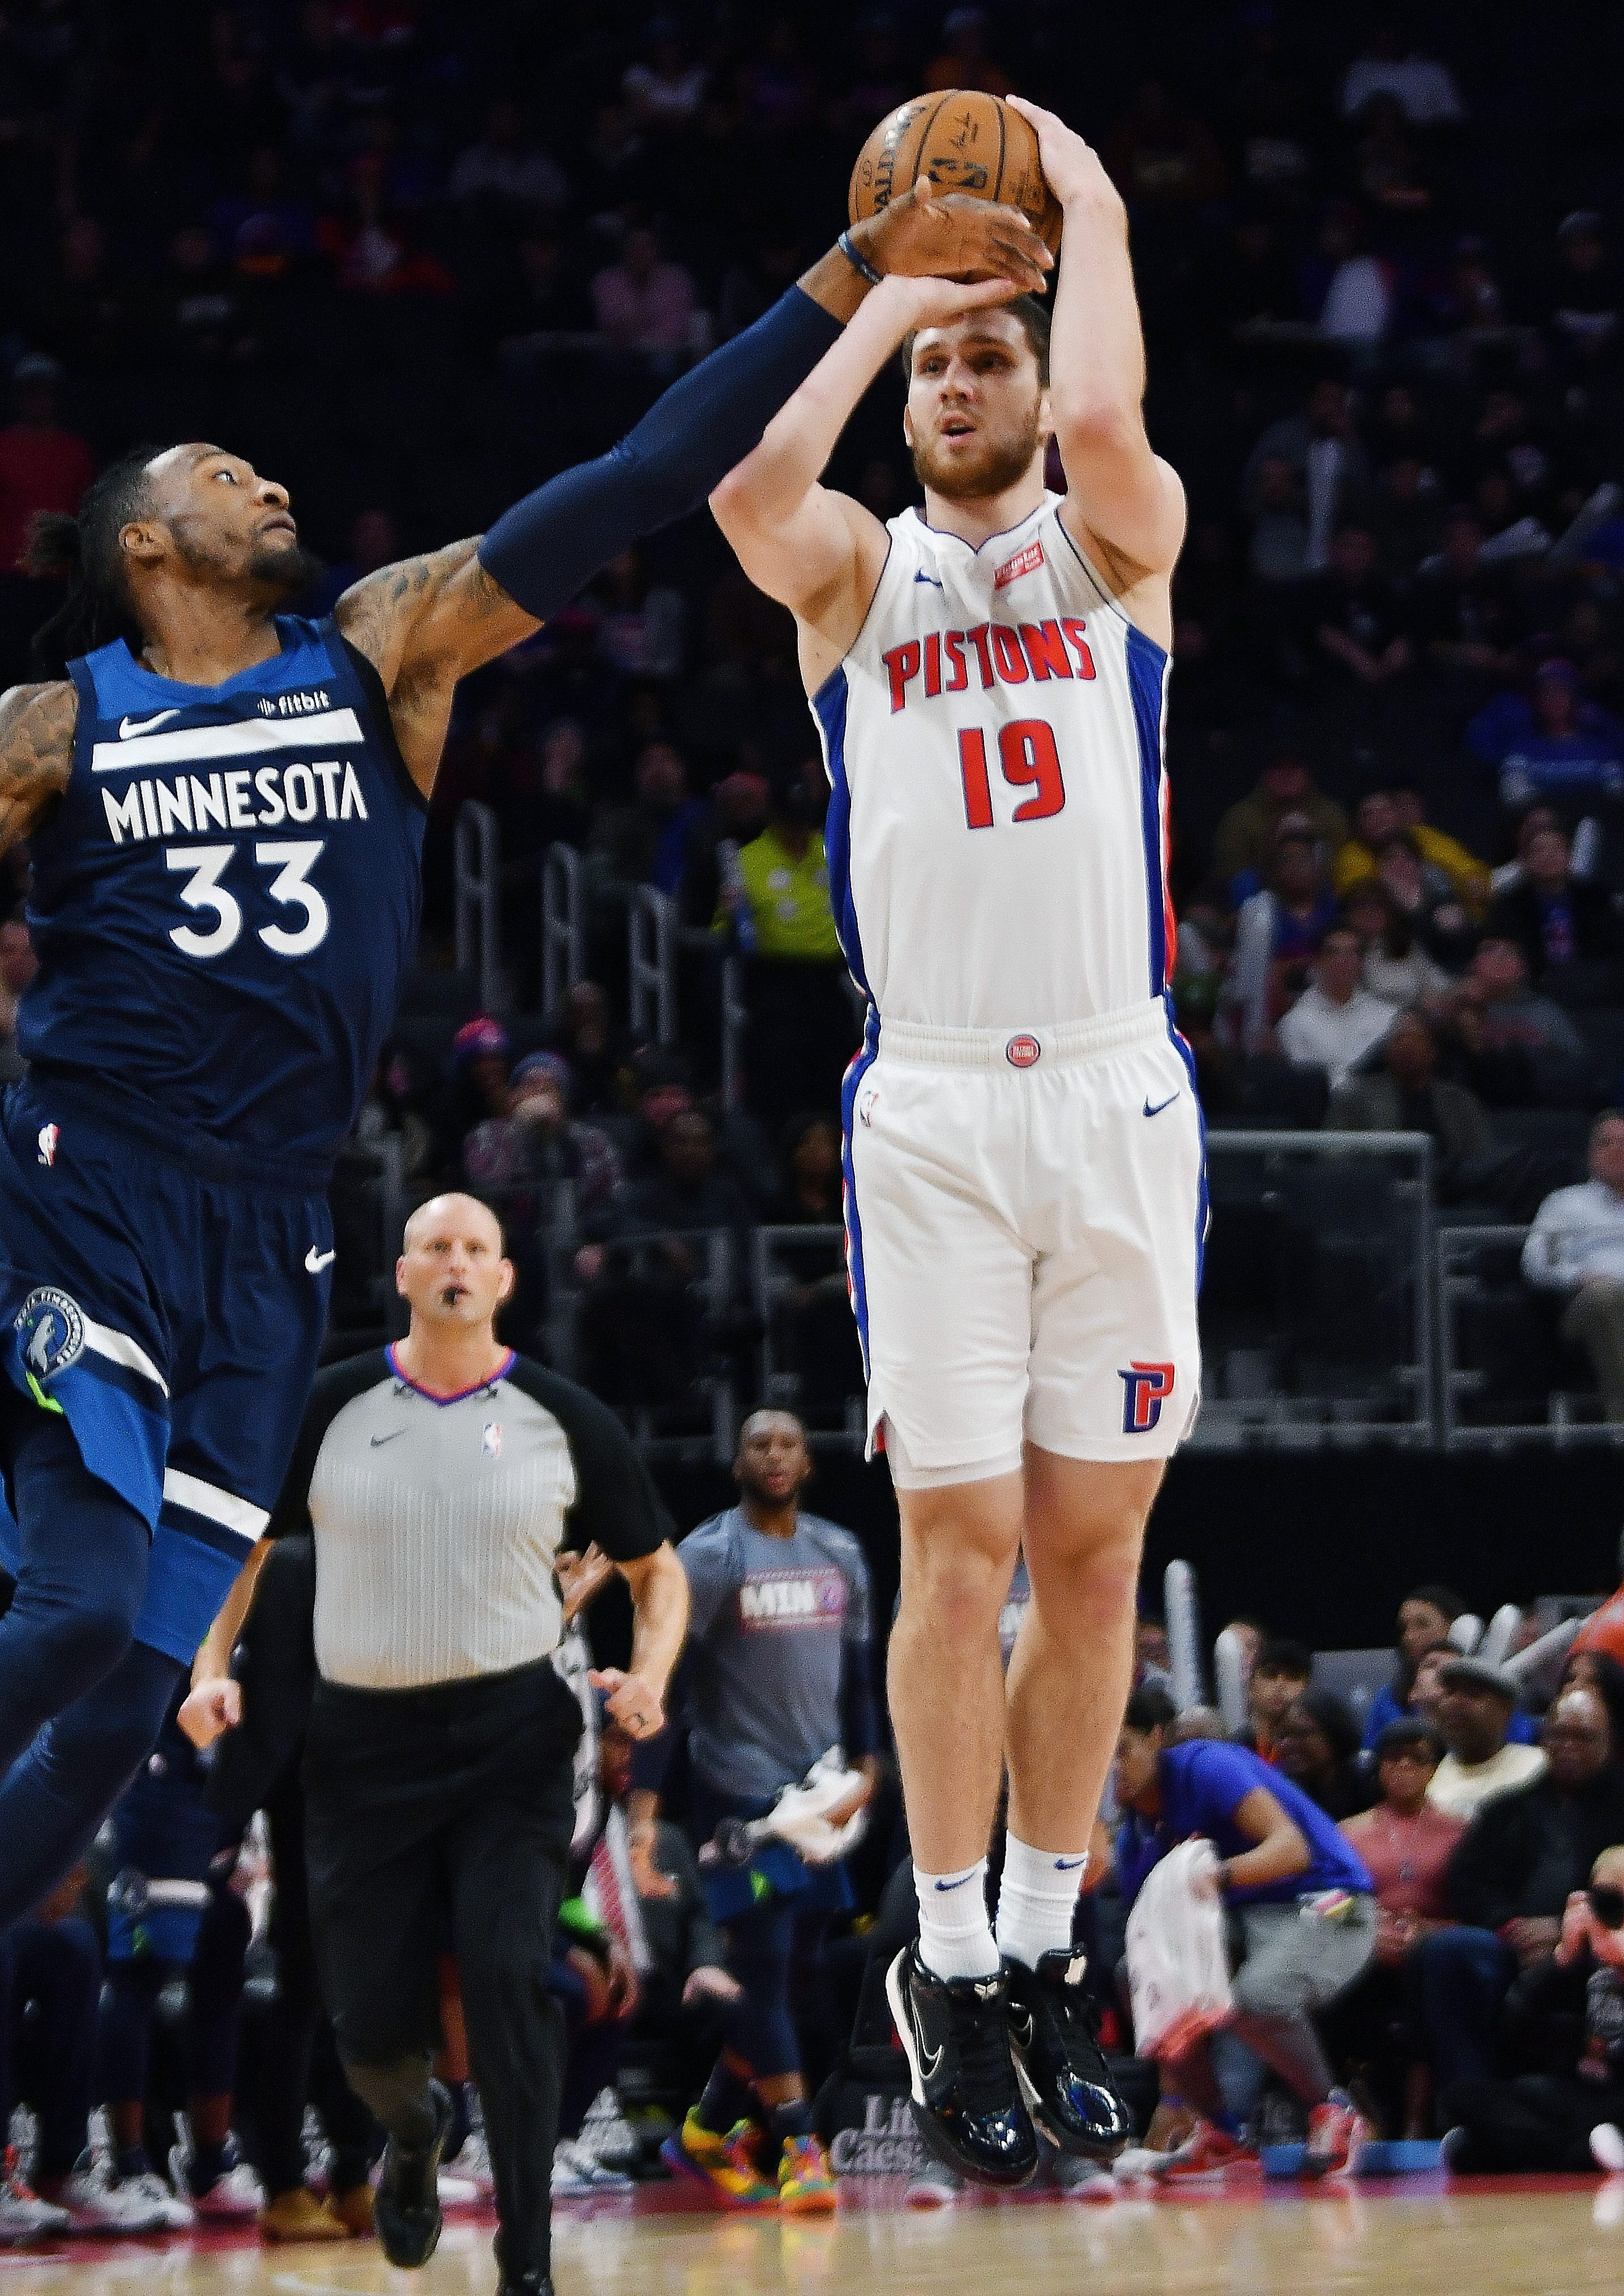 Pistons' Svi Mykhailiuk shoots over Timberwolves' Robert Covington in the first quarter.